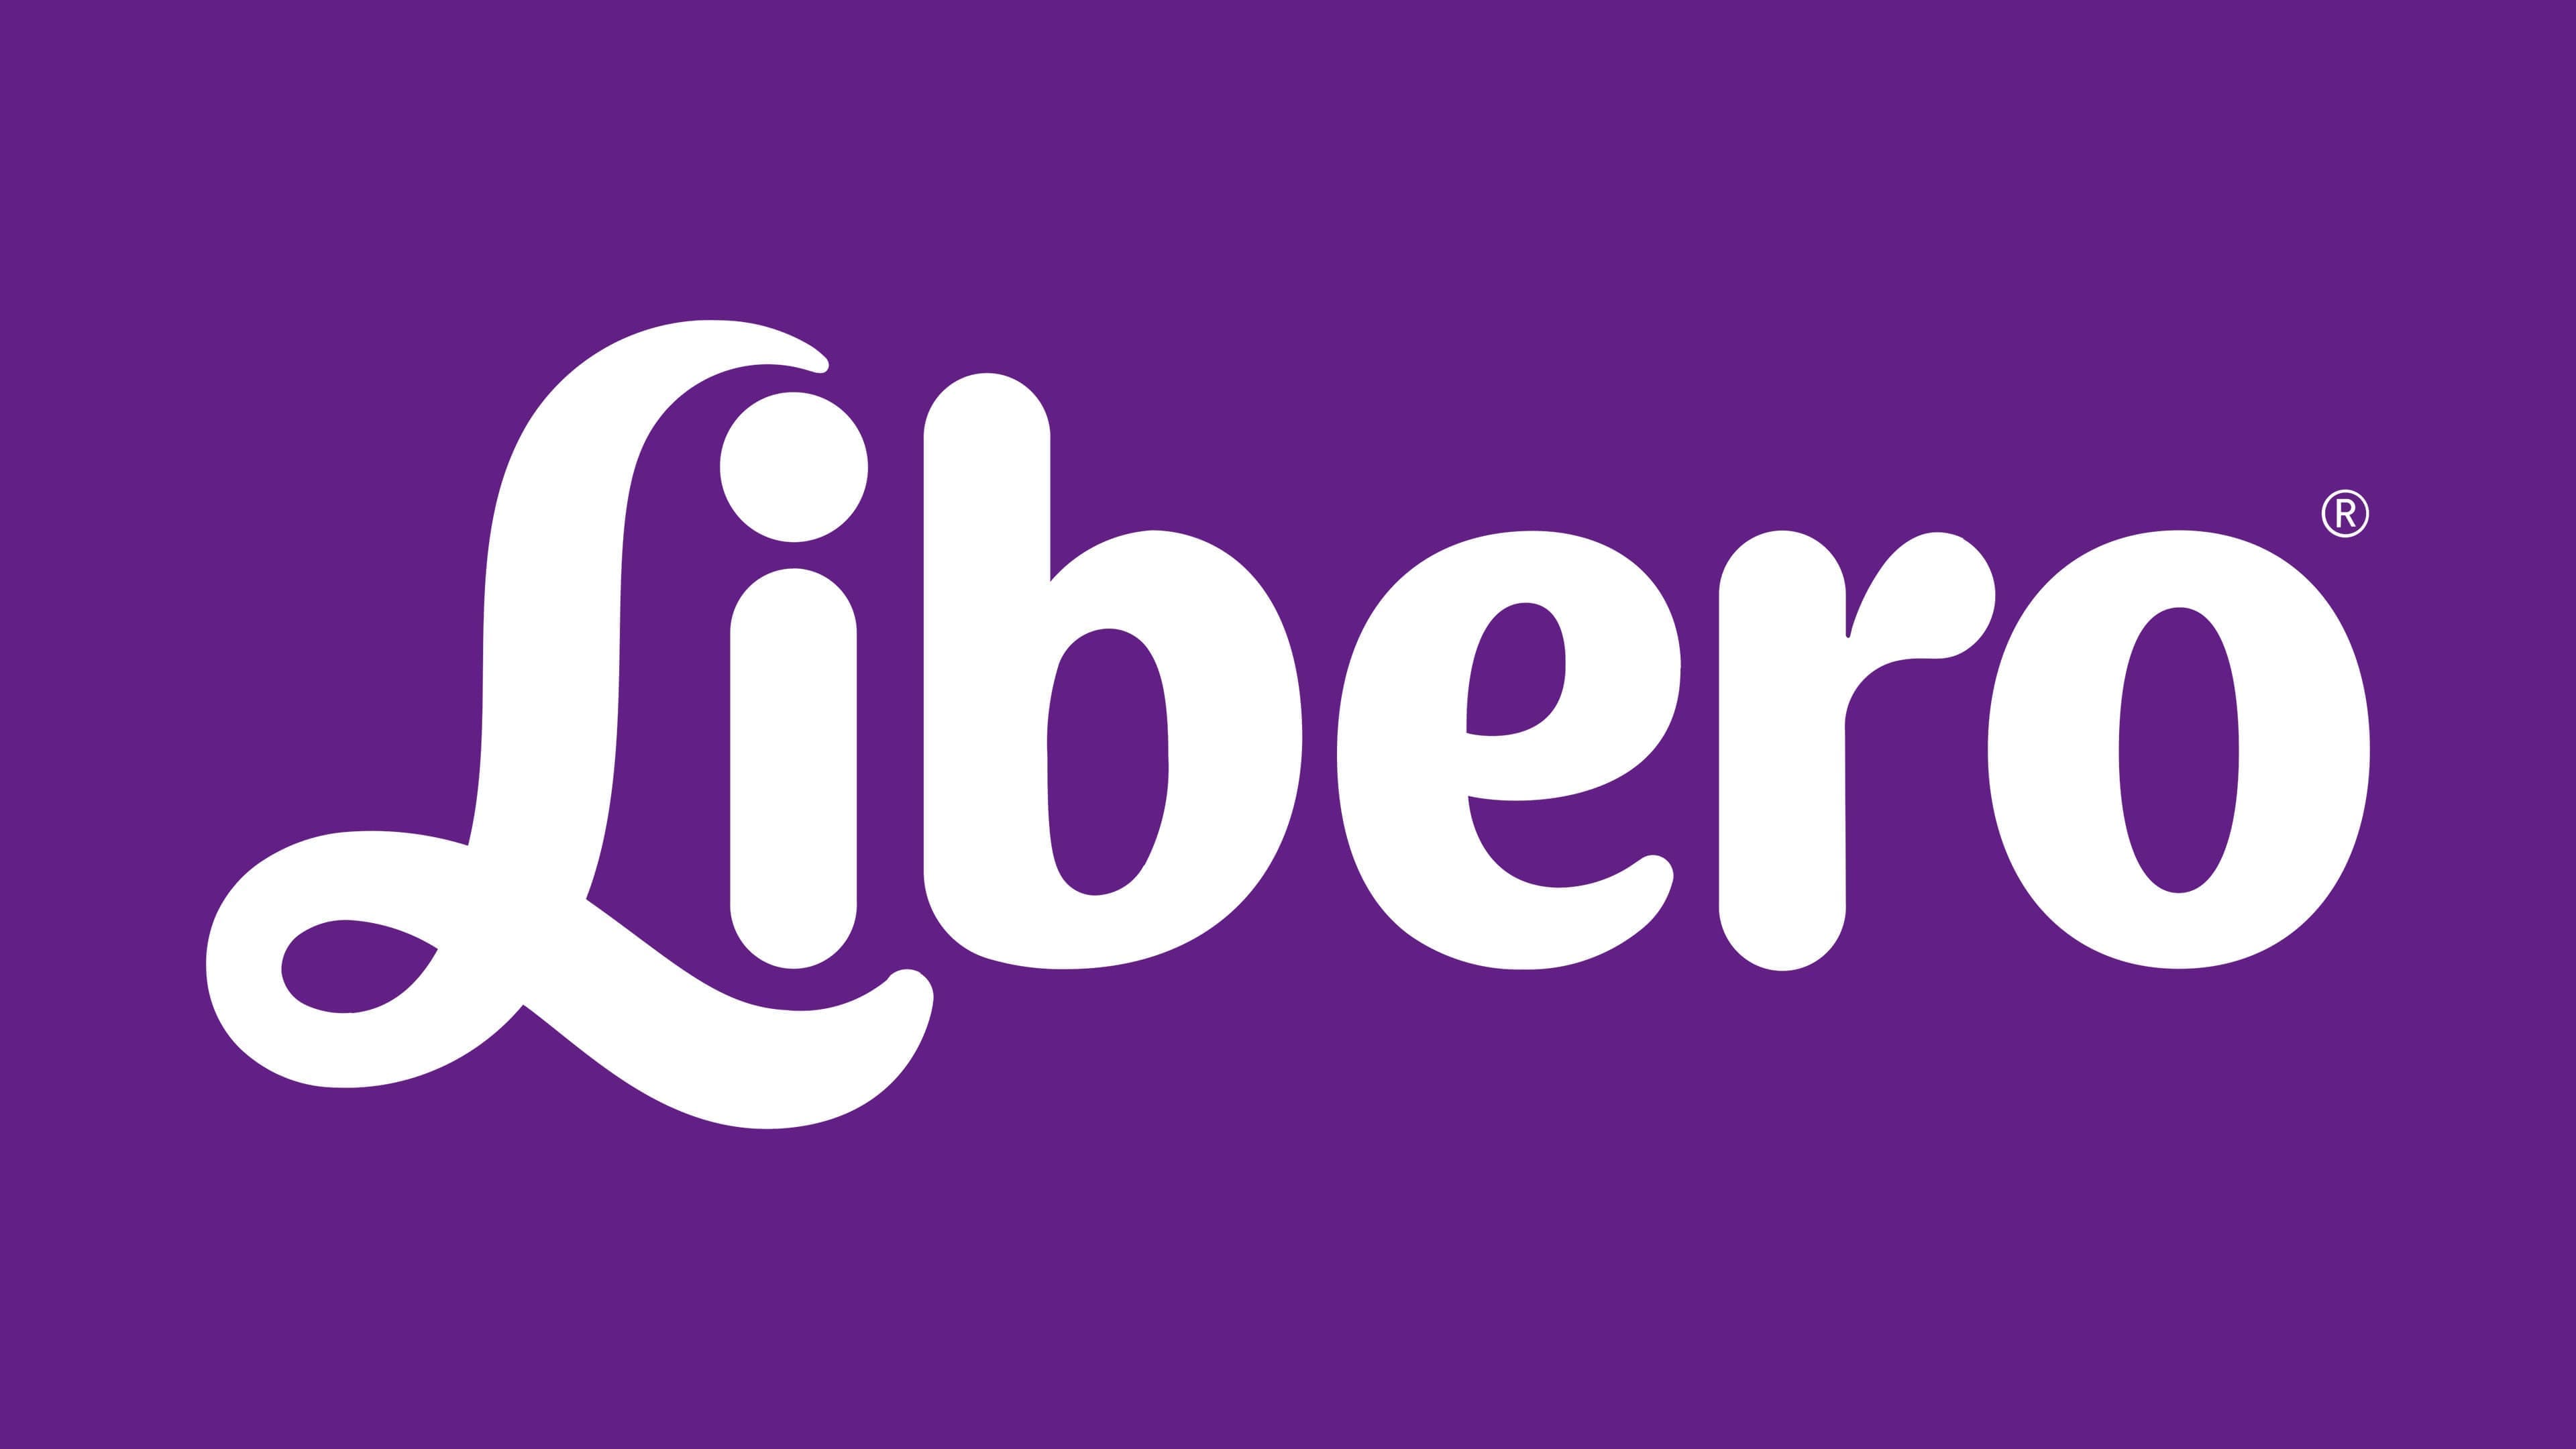 Libero Logo, symbol, meaning, history, PNG, brand